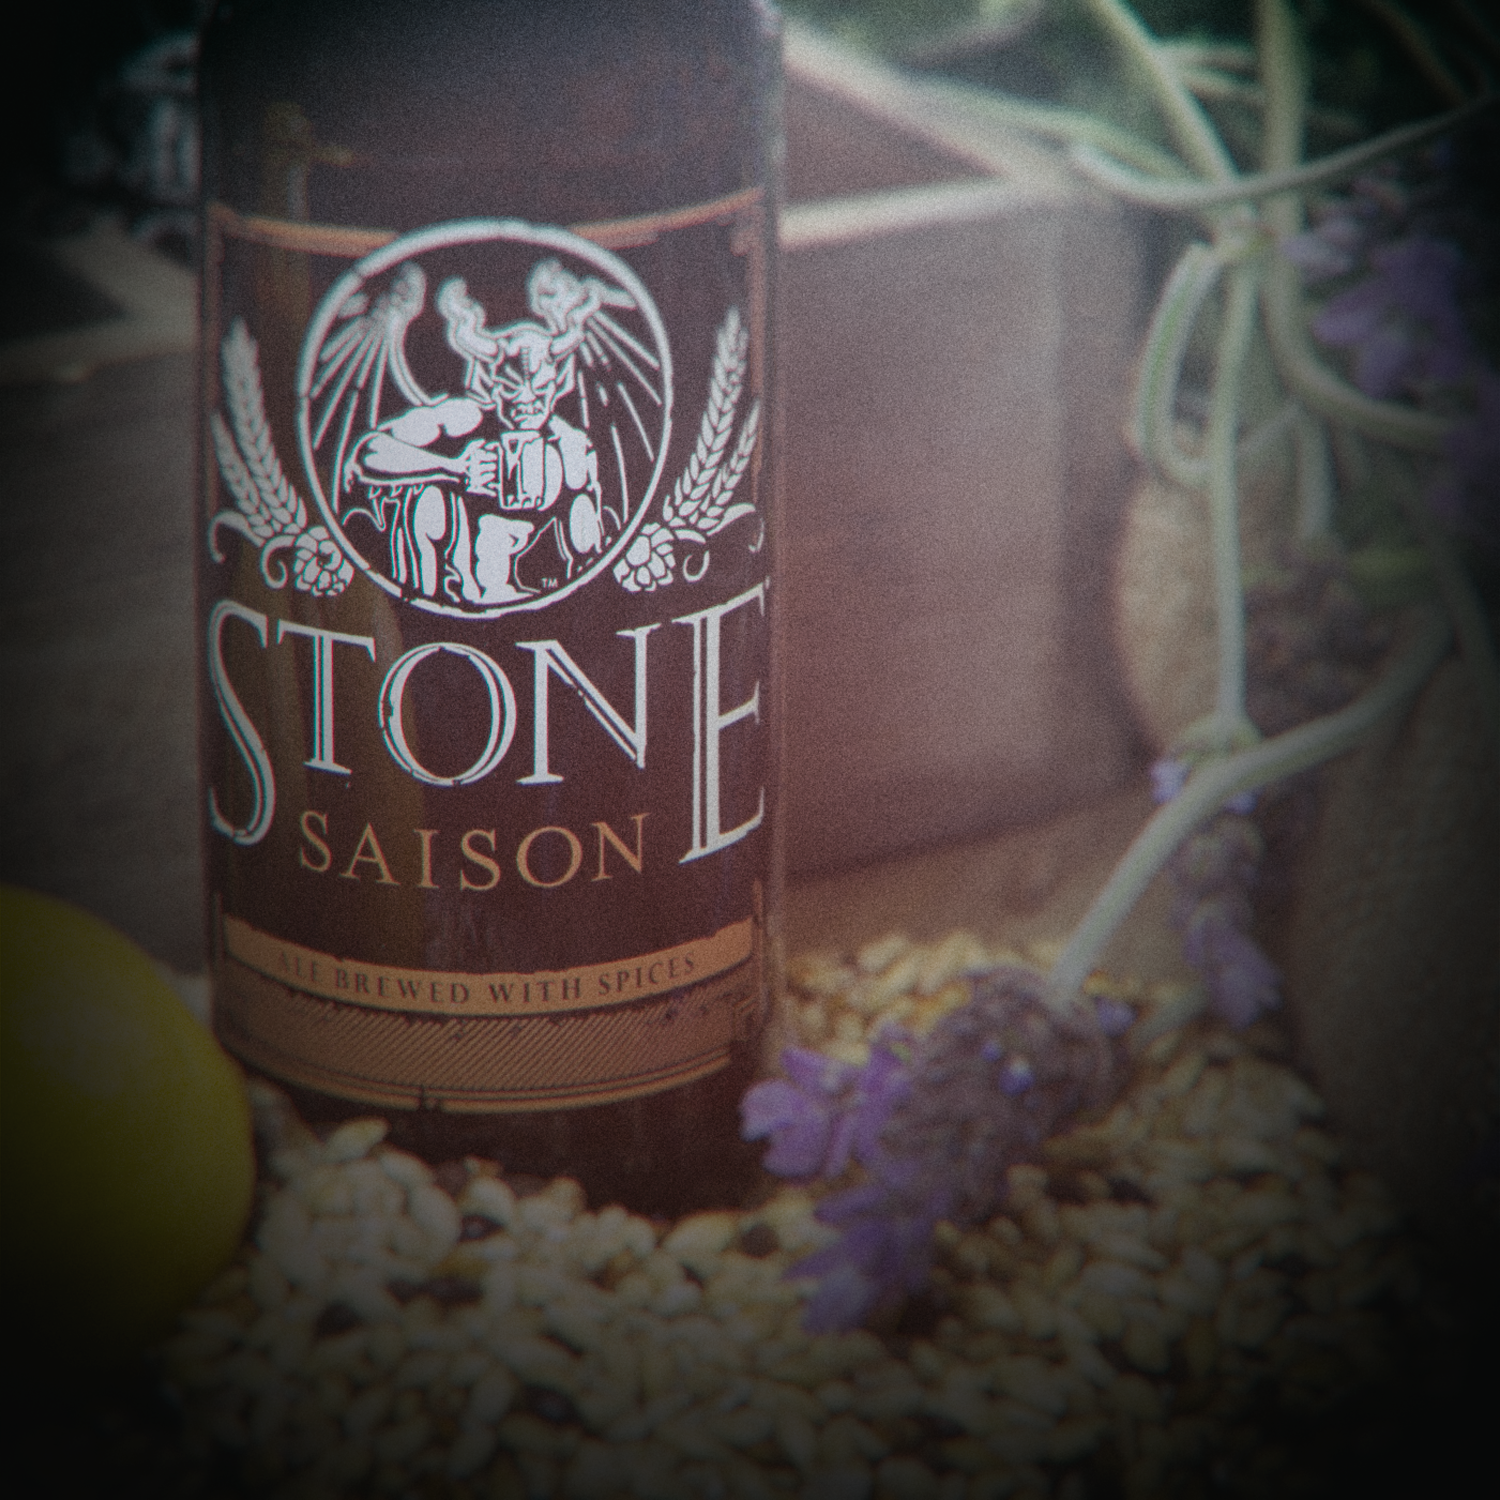 Stone Saison bottle behind shrubs